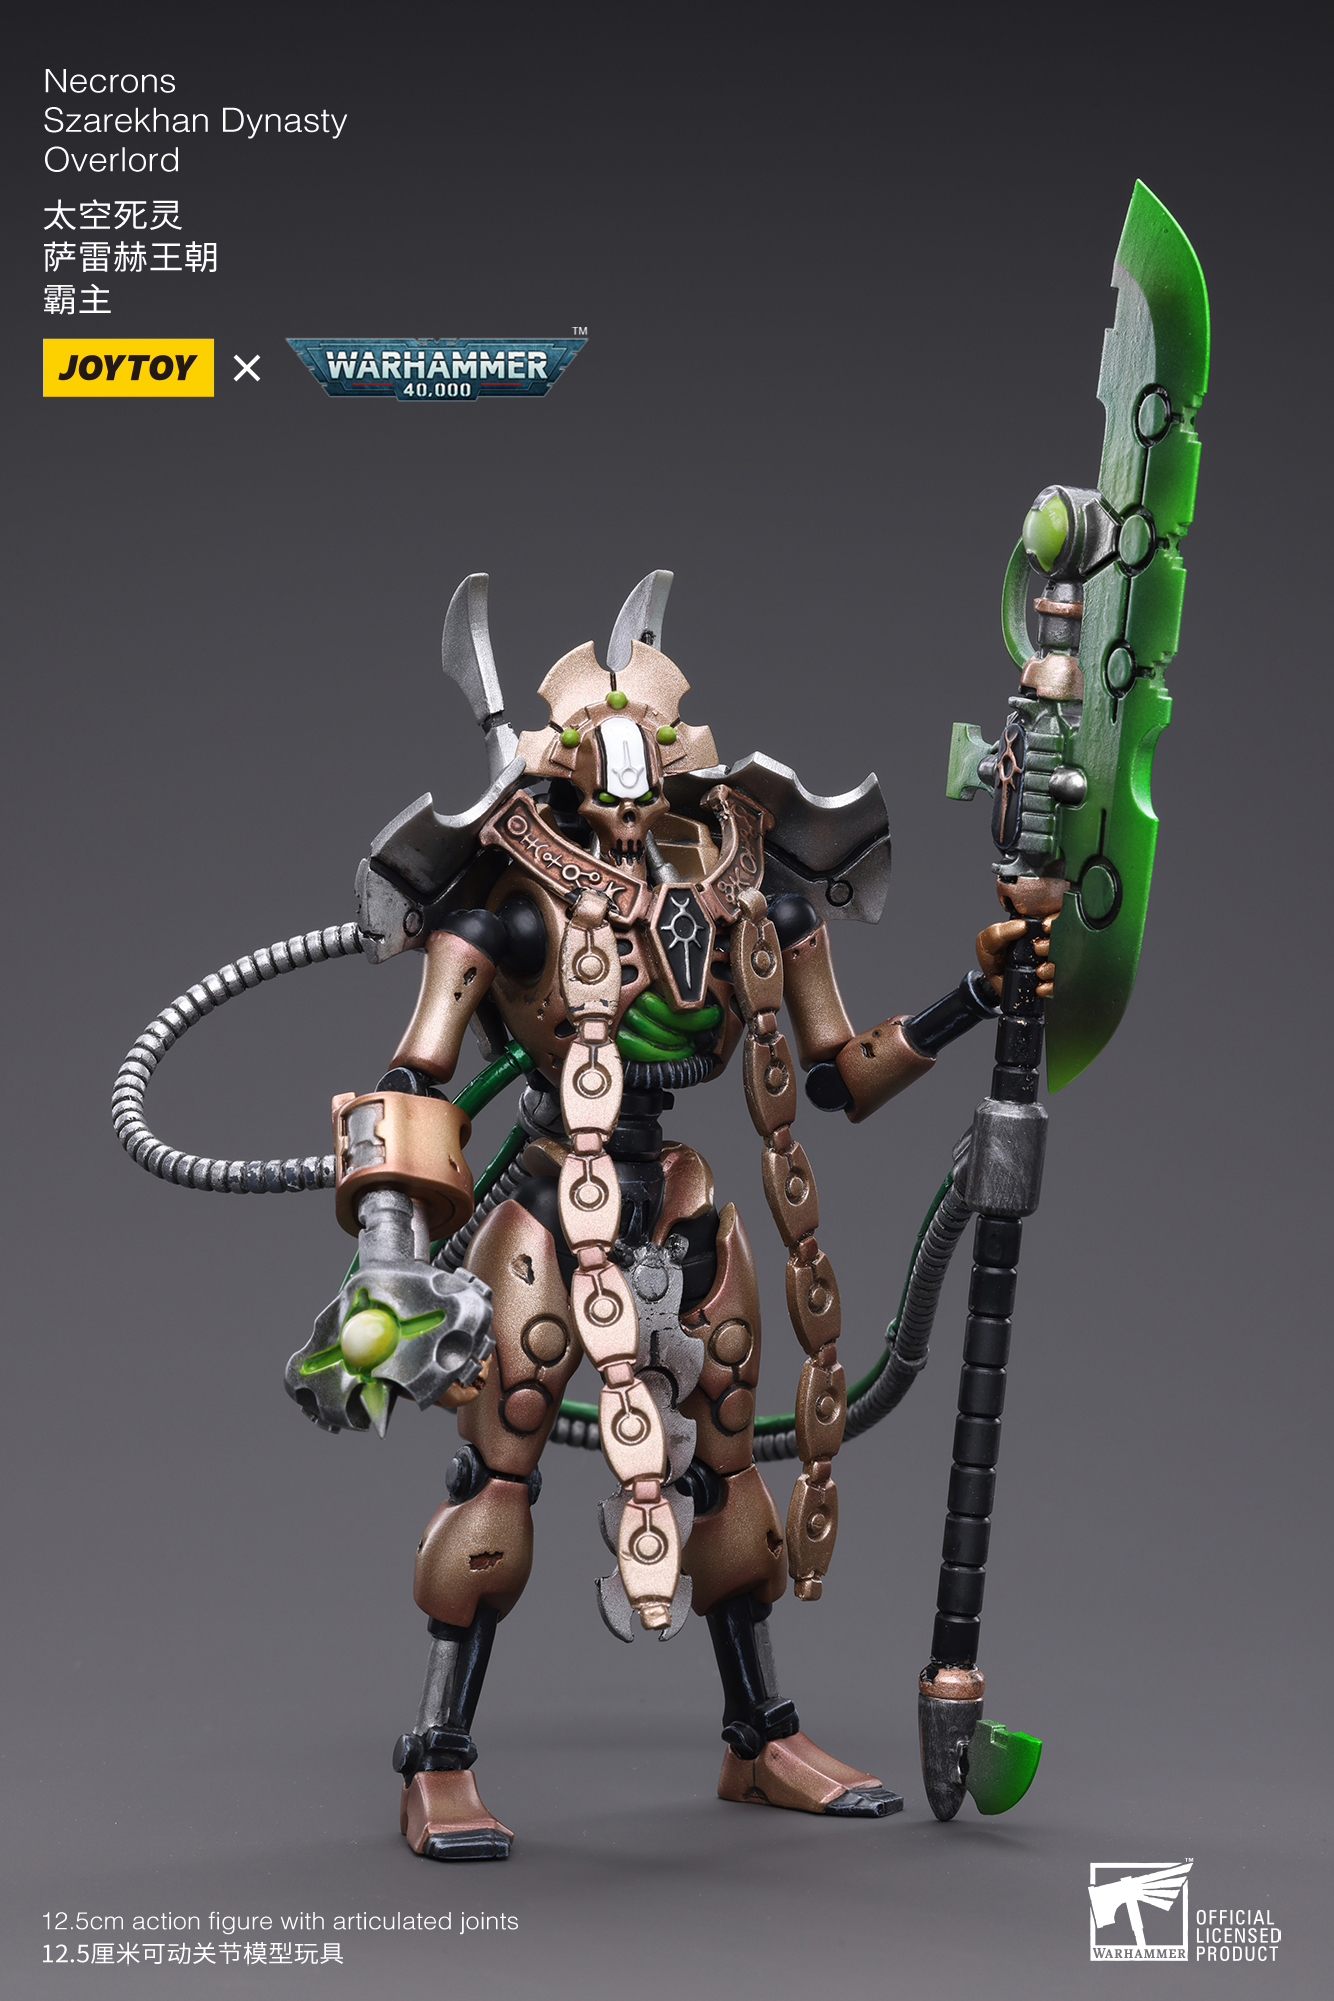 JoyToy Action Figure Warhammer 40K Necrons Szarekhan Dynasty Overlord